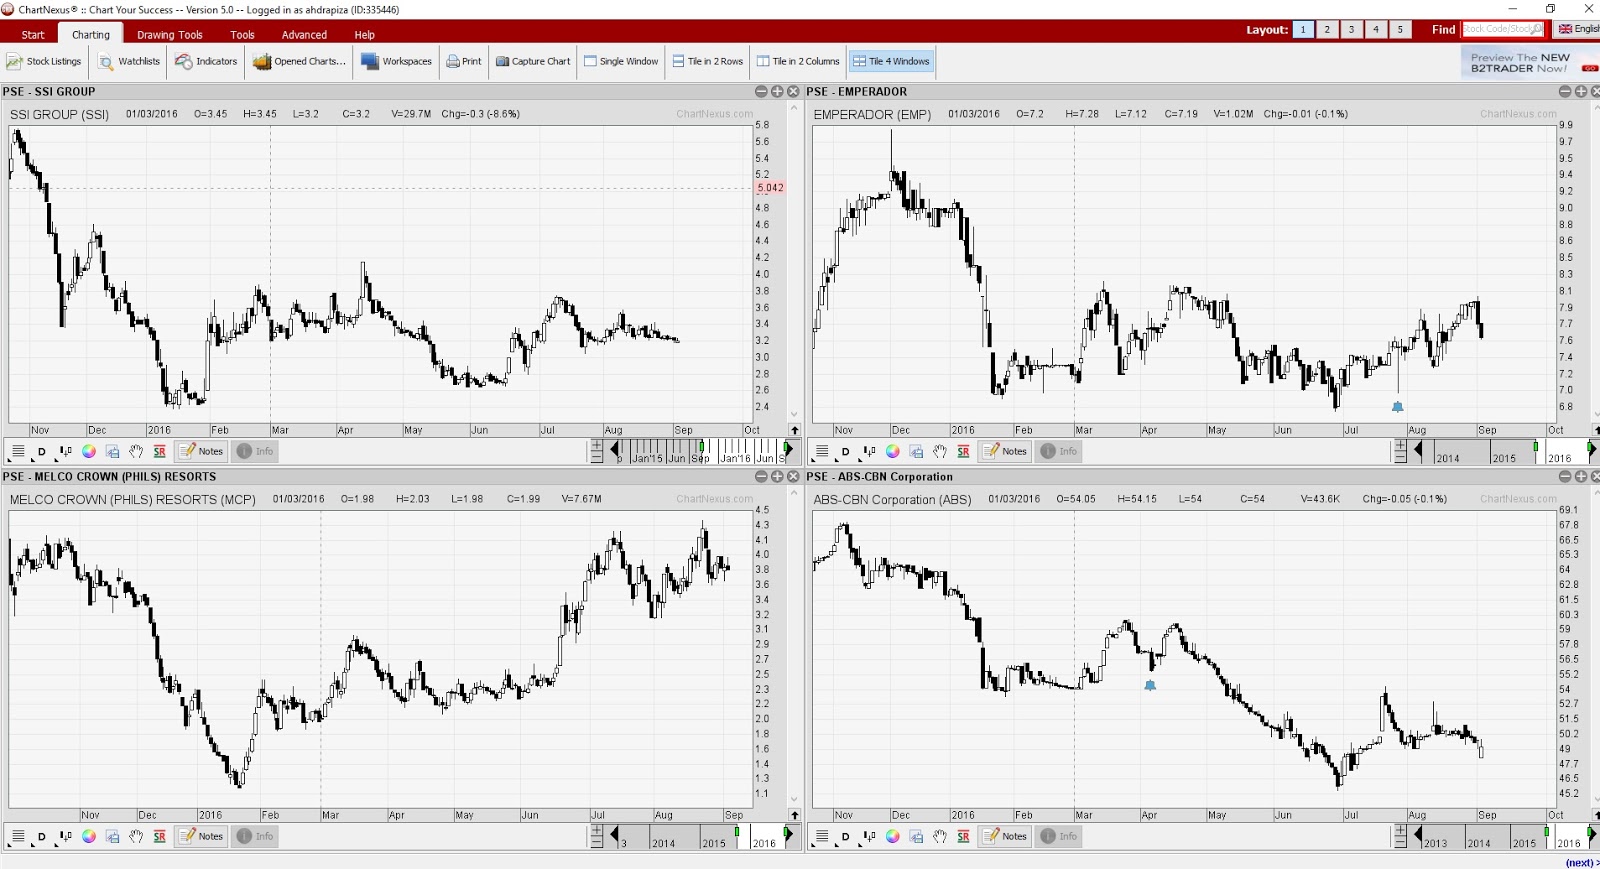 Stock Charting Software Comparison